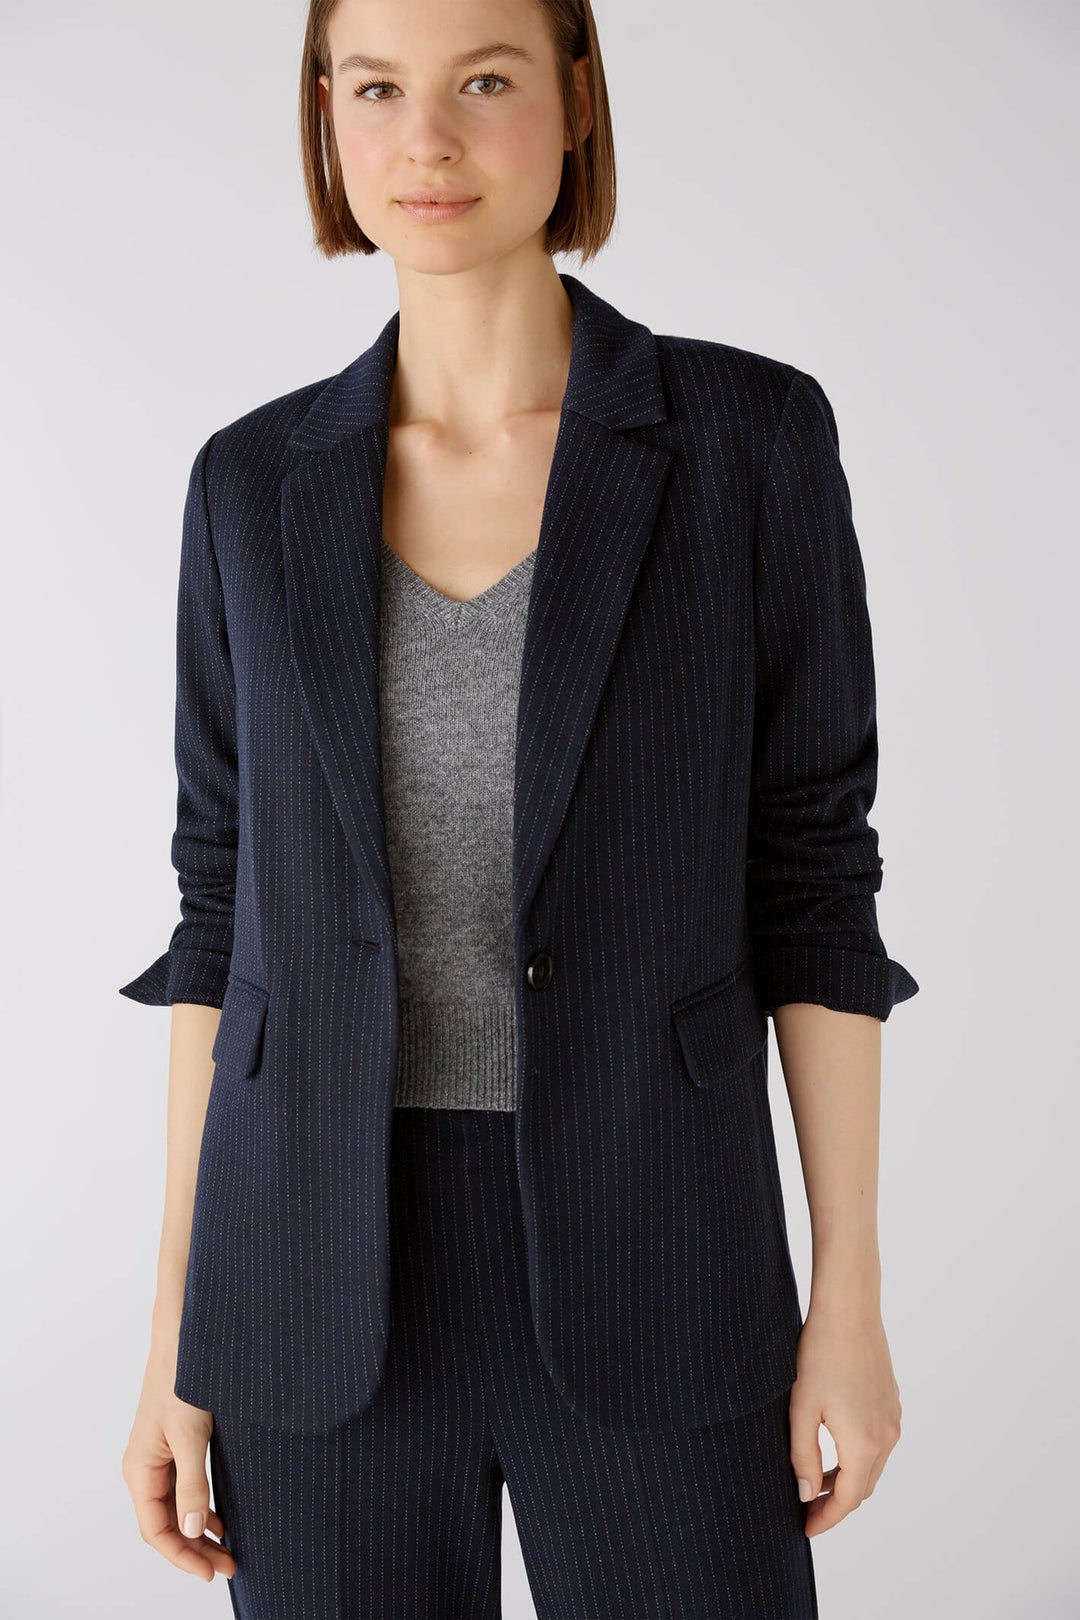 Oui 79453 Navy Pinstripe One Button Blazer Jacket - Olivia Grace Fashion